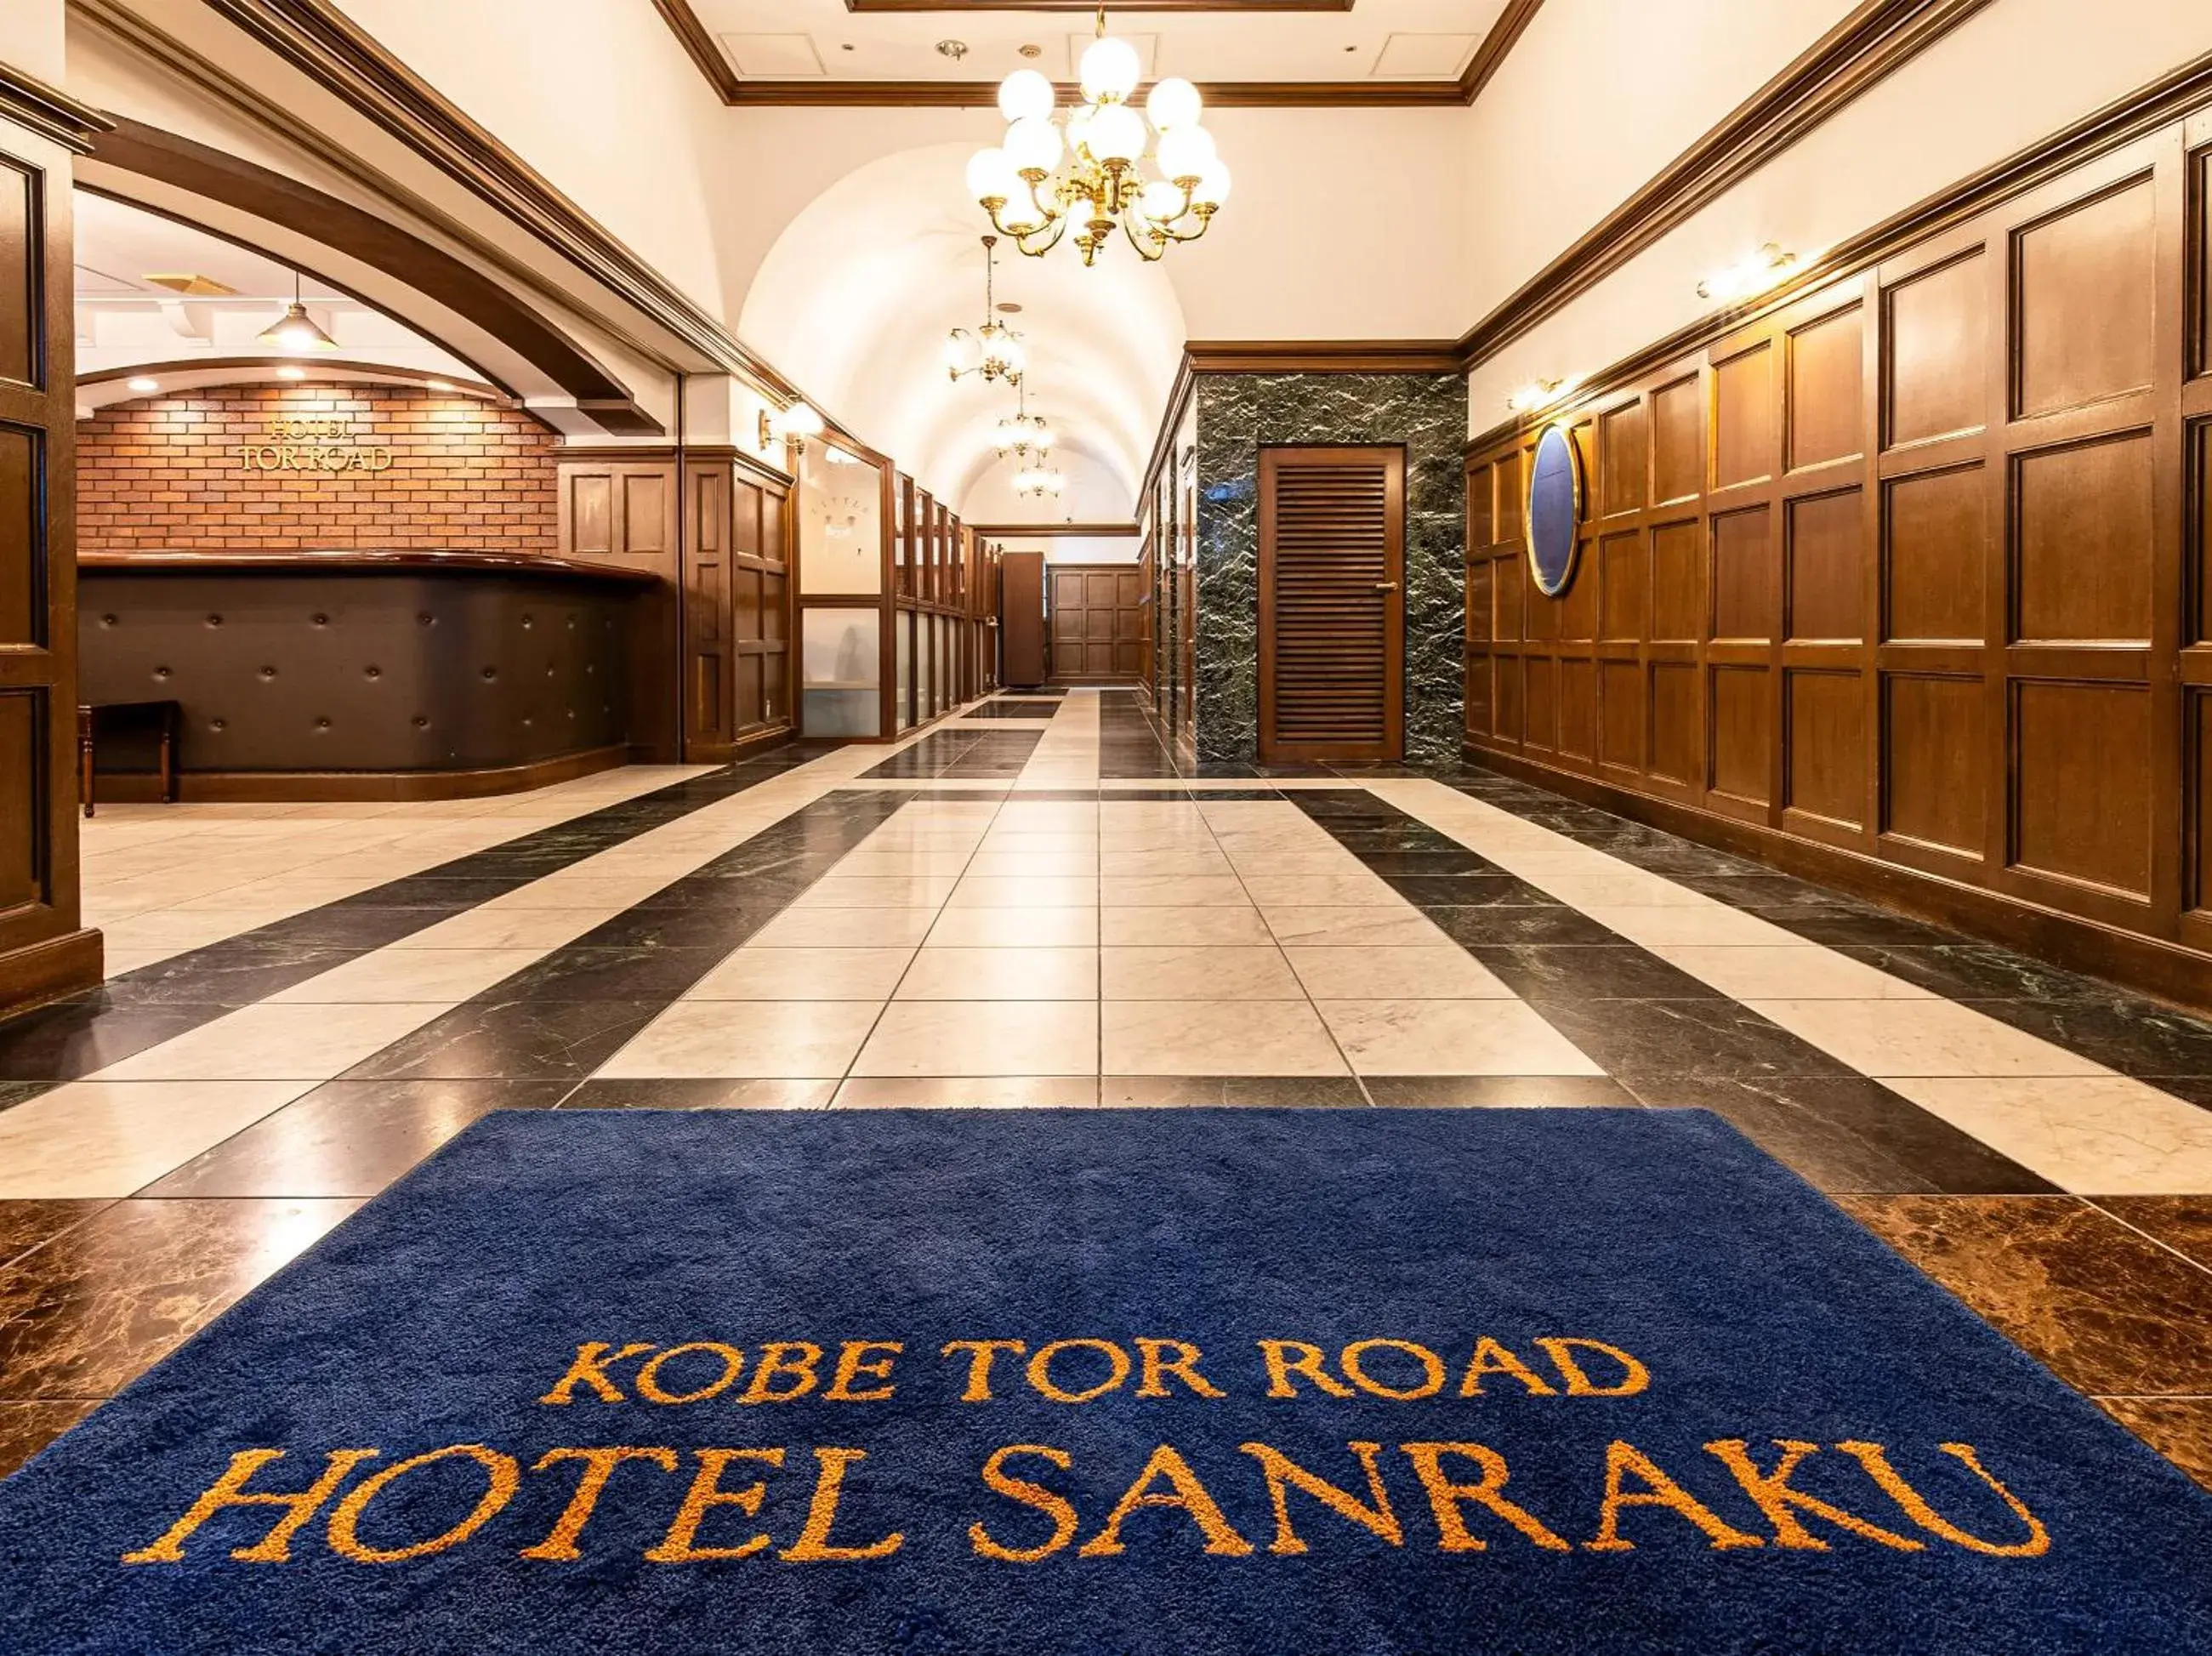 Lobby or reception in Kobe Tor Road Hotel Sanraku